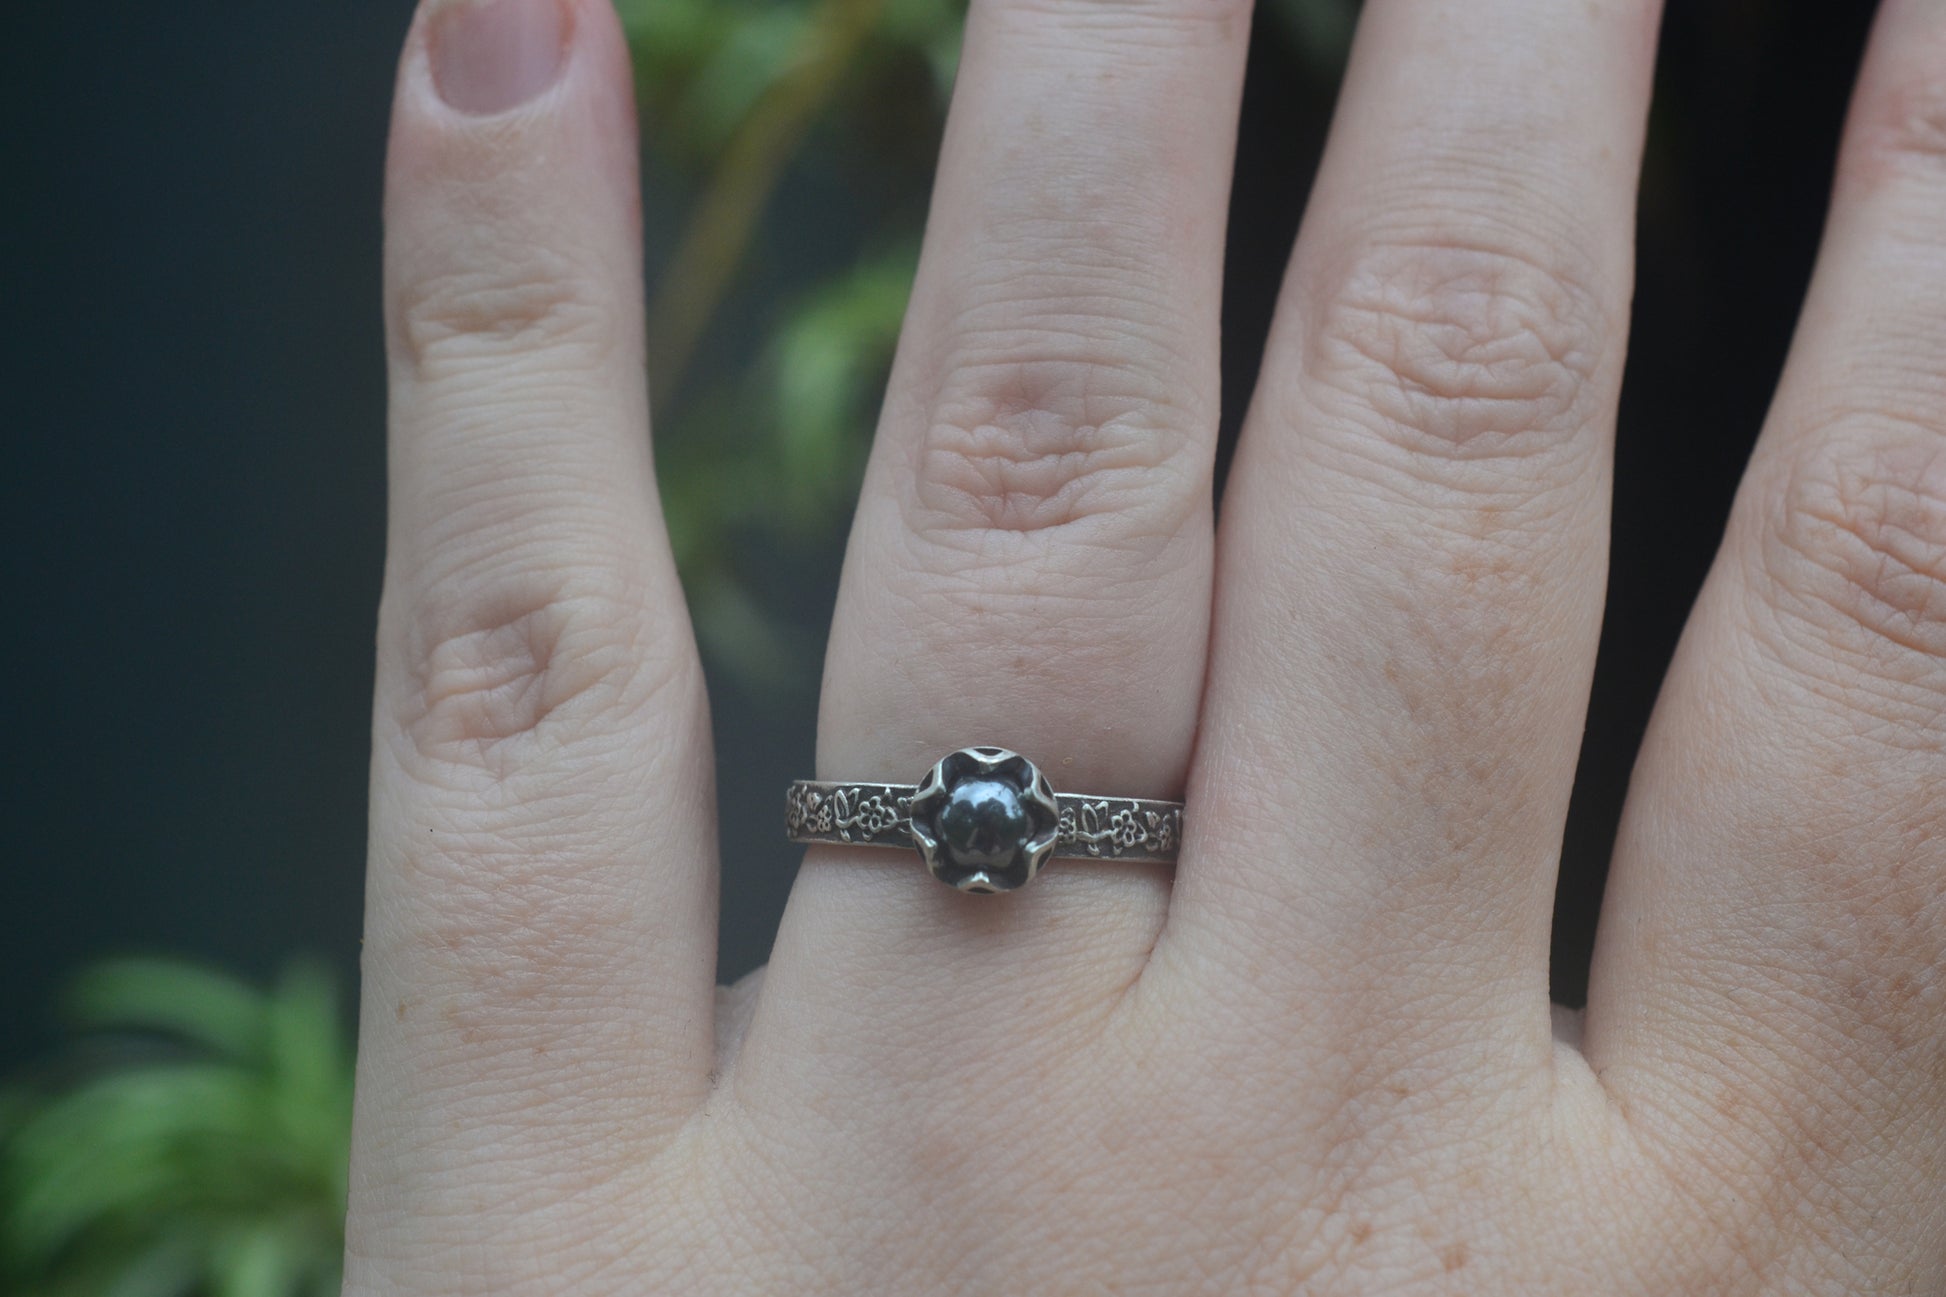 Gothic Black Crystal Ring With Rosebush Pattern